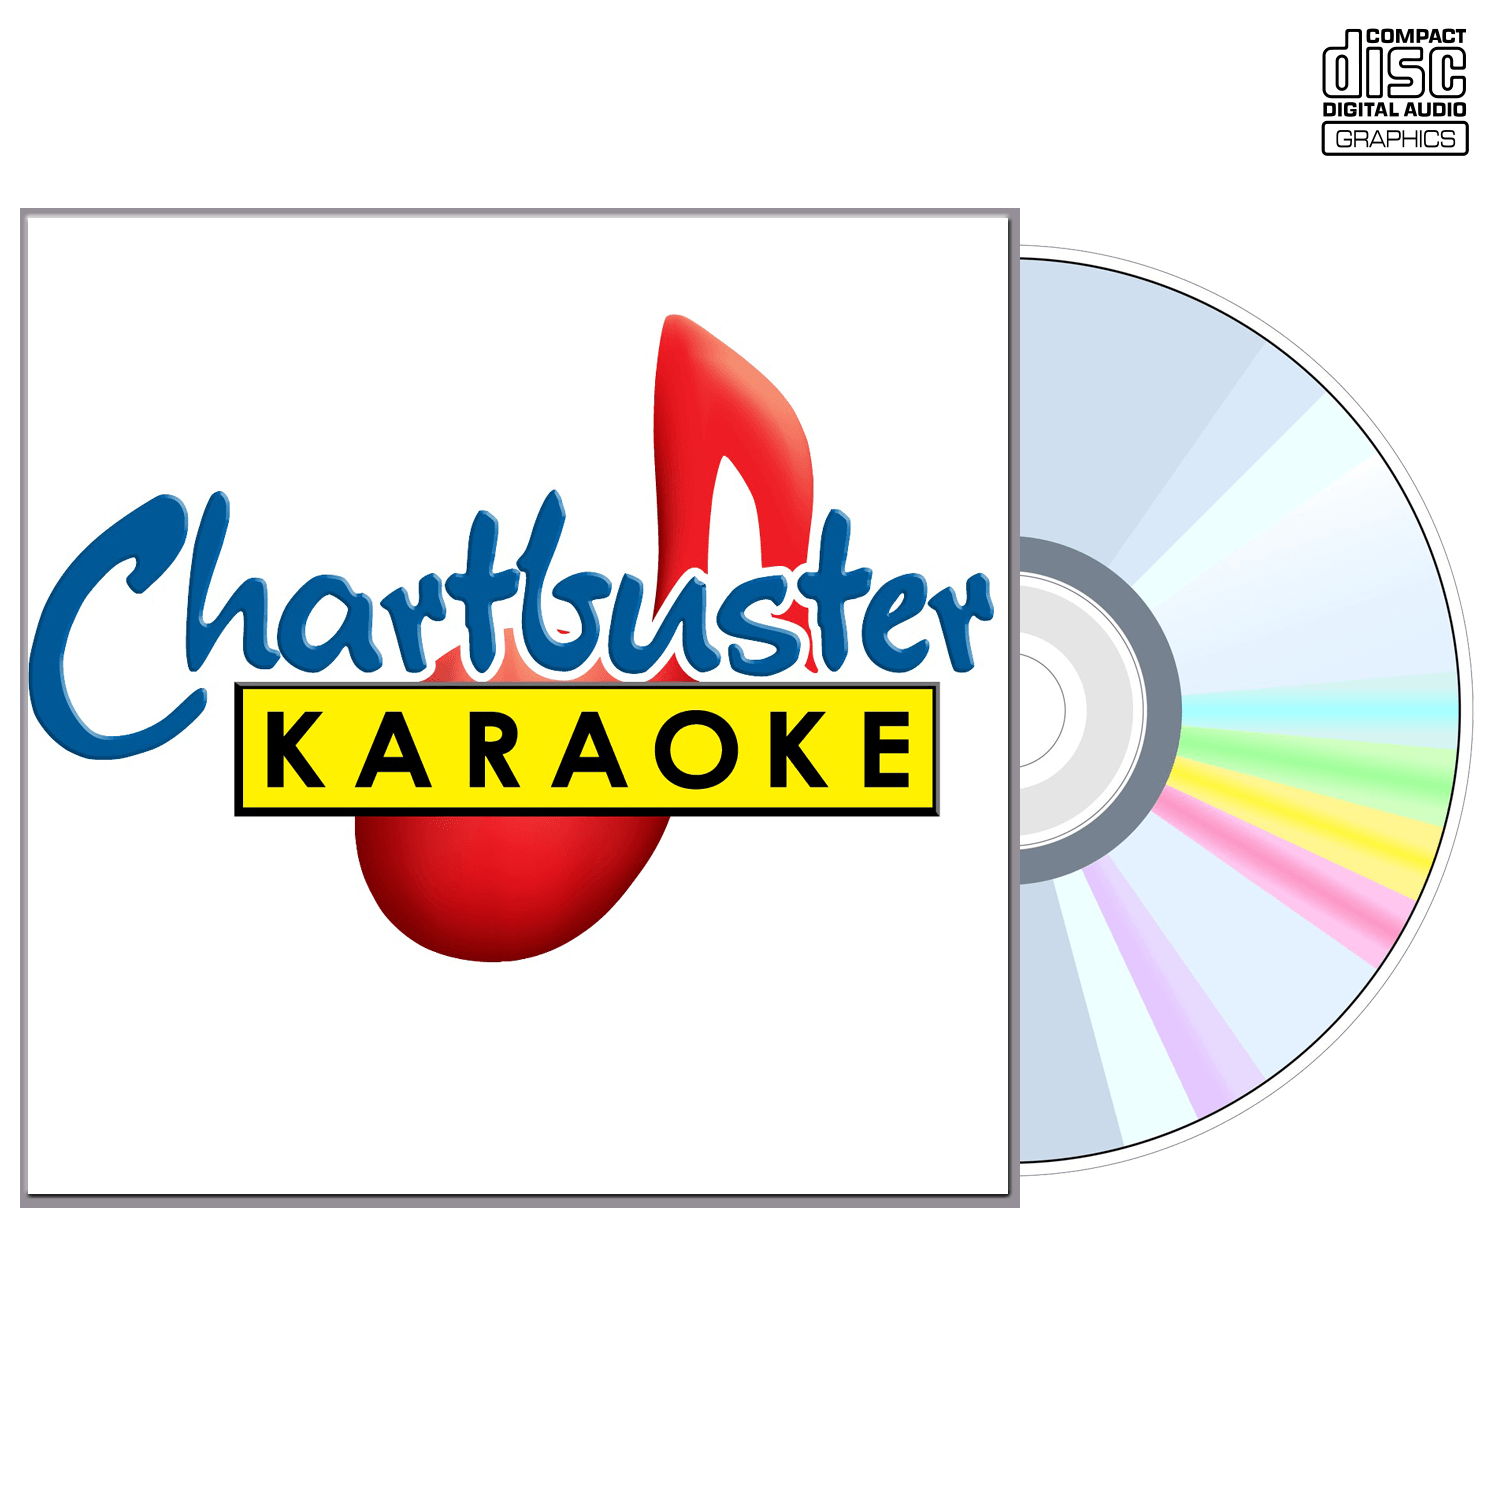 70's Collection Vol 07 - CD+G - Chartbuster Karaoke - Karaoke Home Entertainment